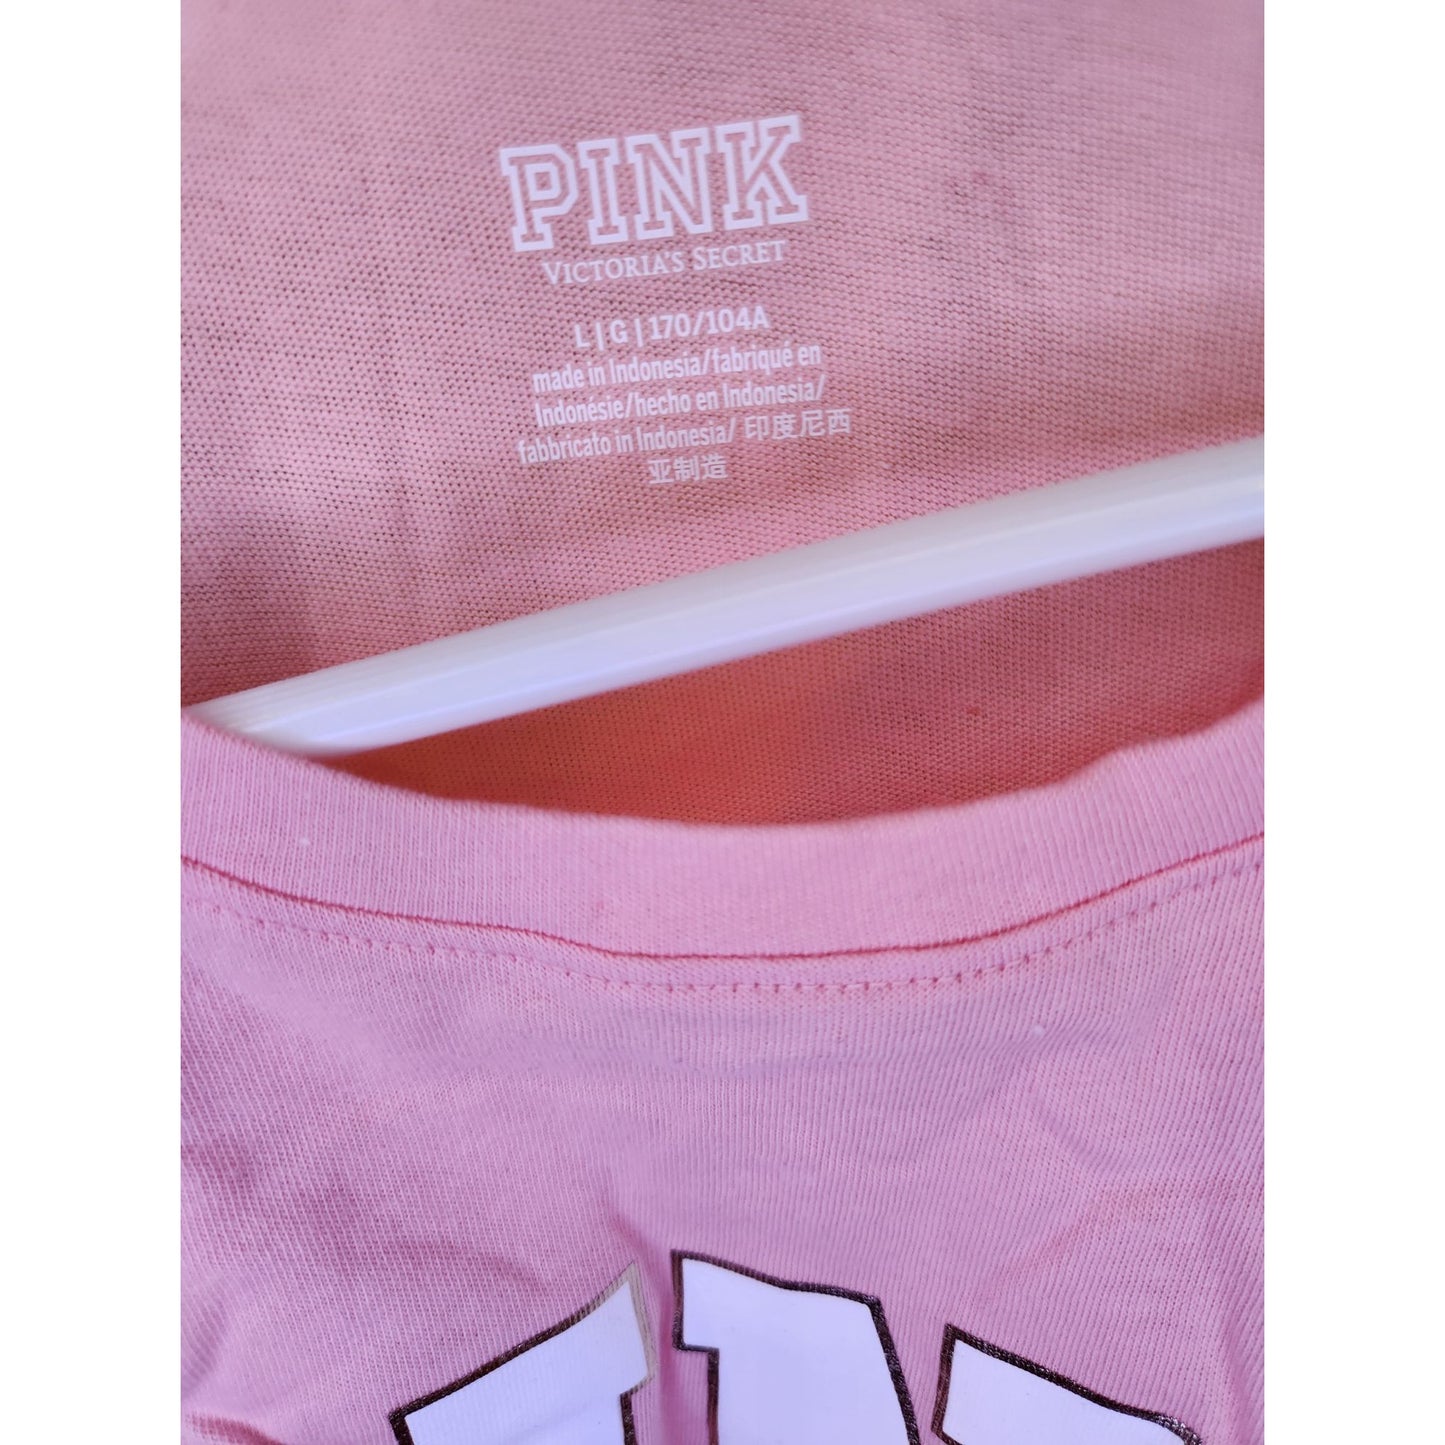 *NEW* Victoria Secret *PINK* Pink tshirt